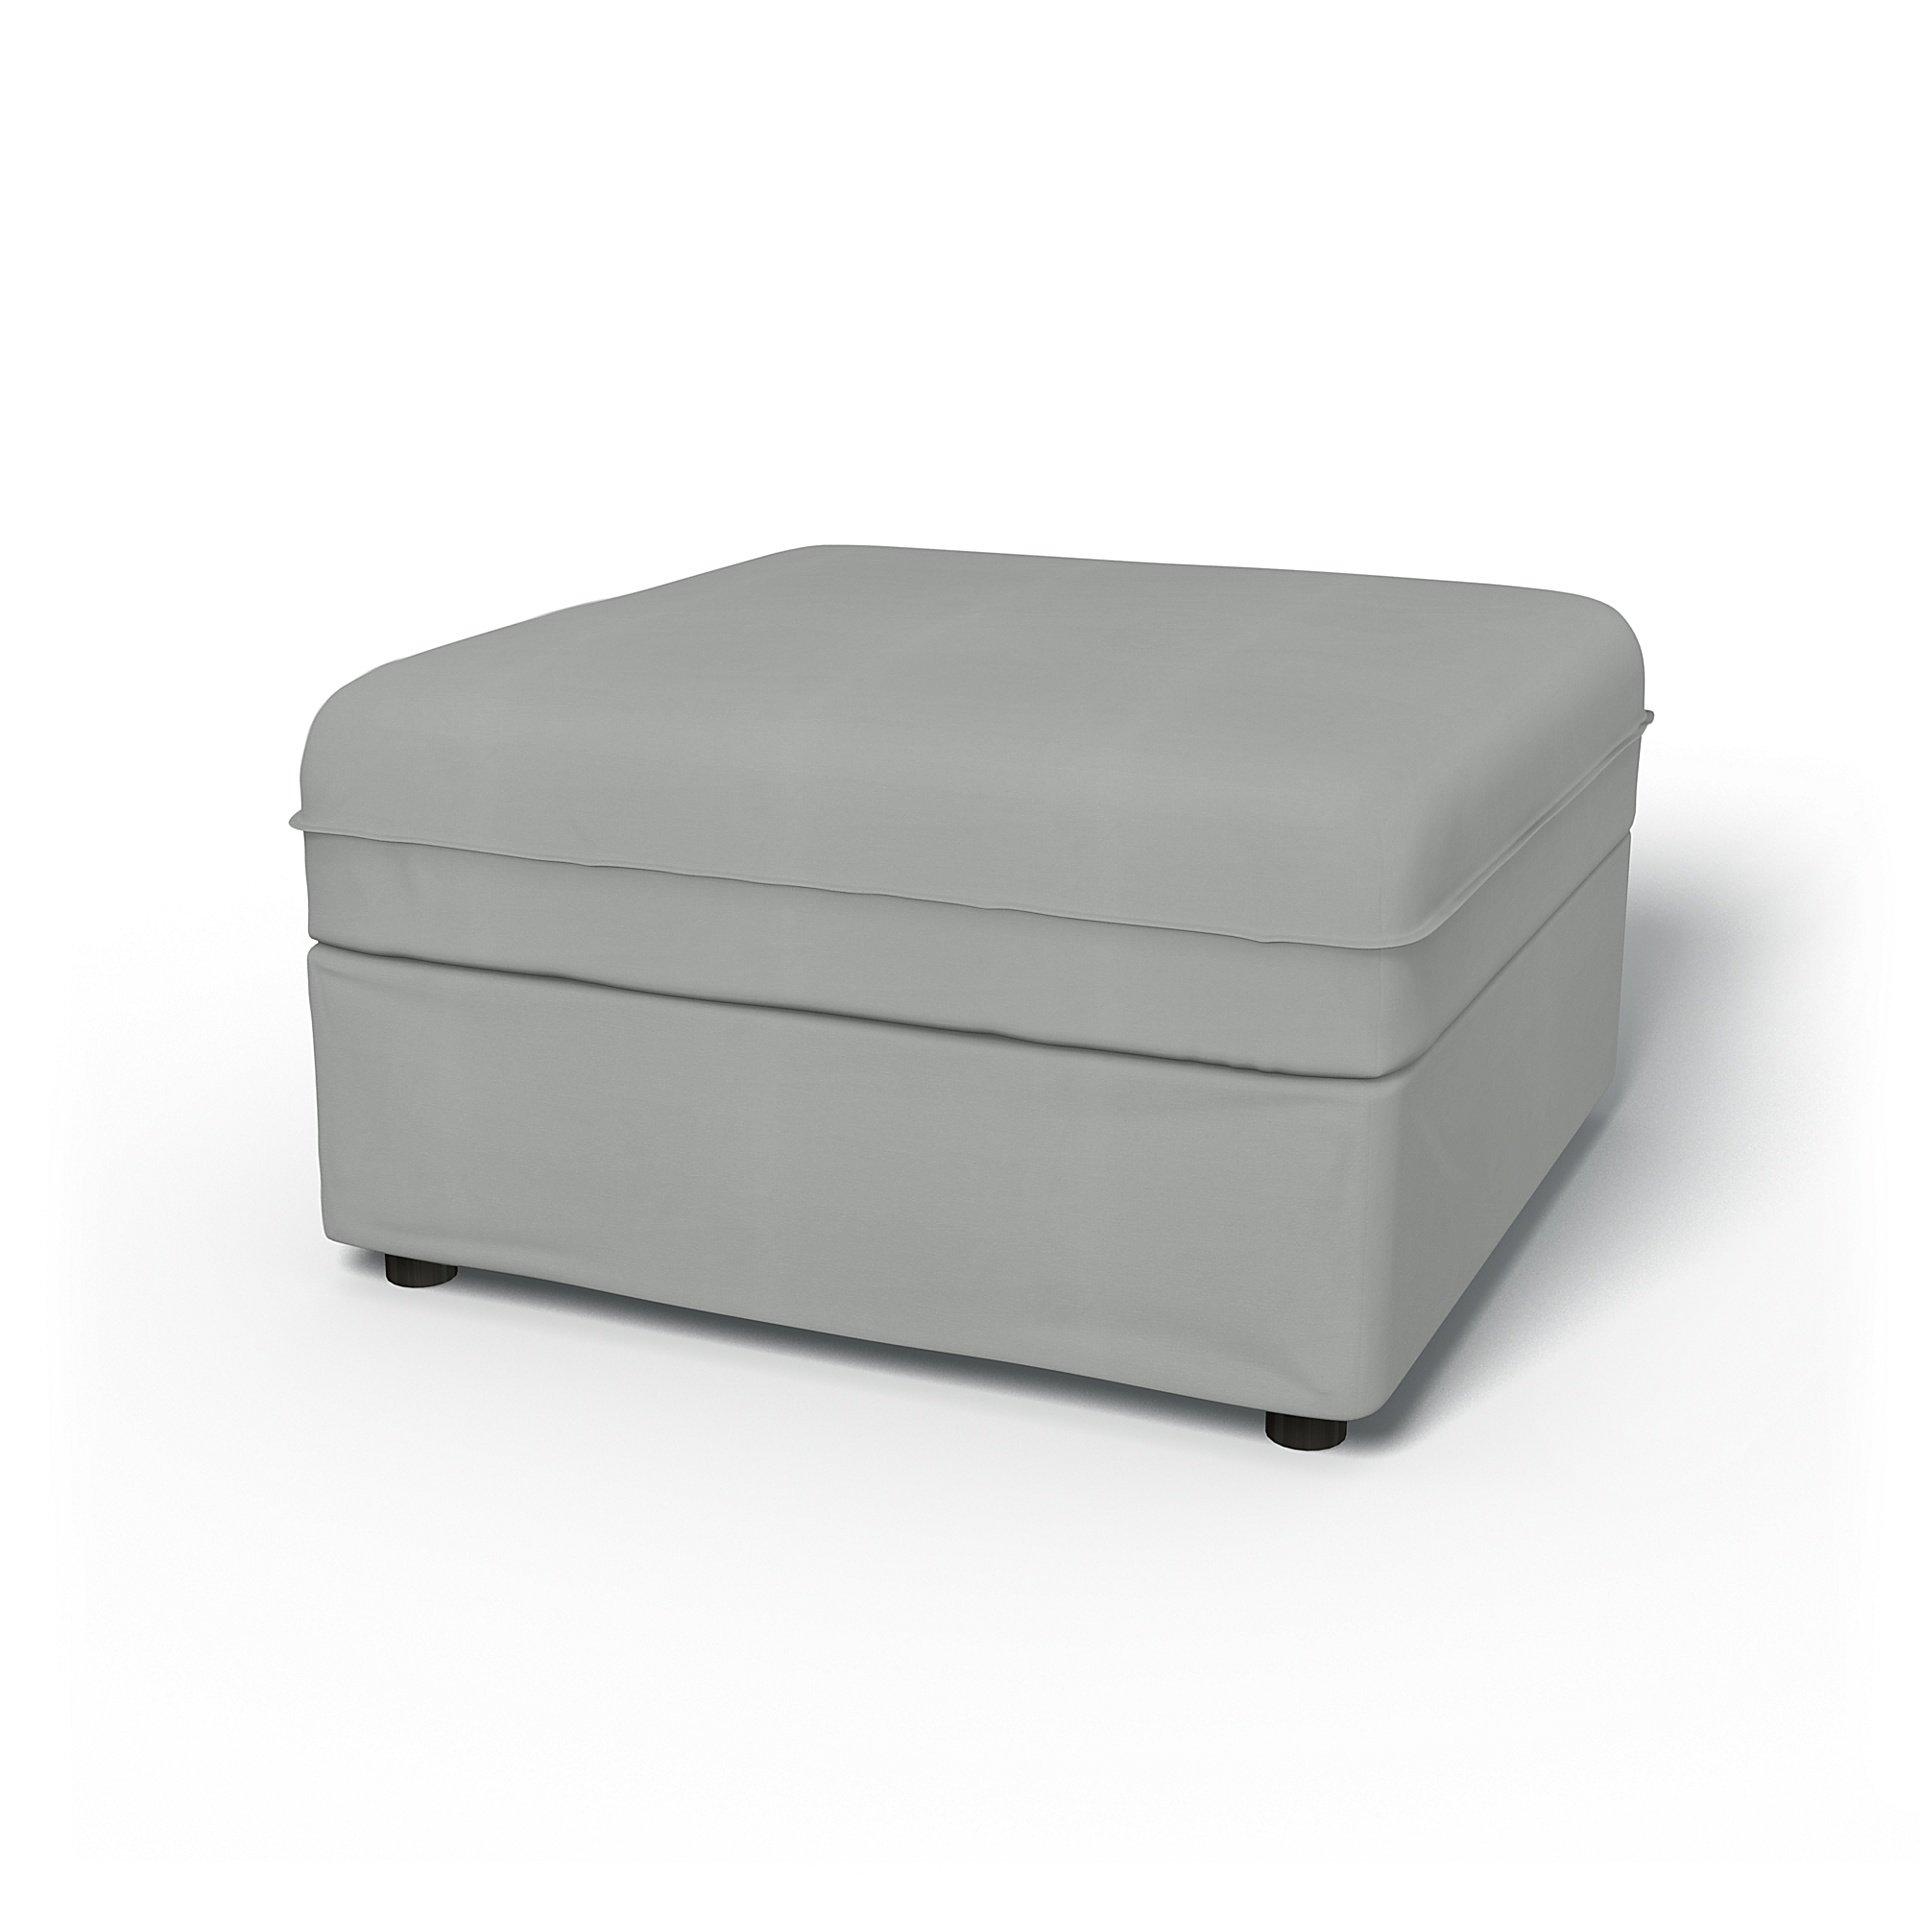 IKEA - Vallentuna Seat Module with Storage Cover 80x80cm 32x32in, Silver Grey, Cotton - Bemz